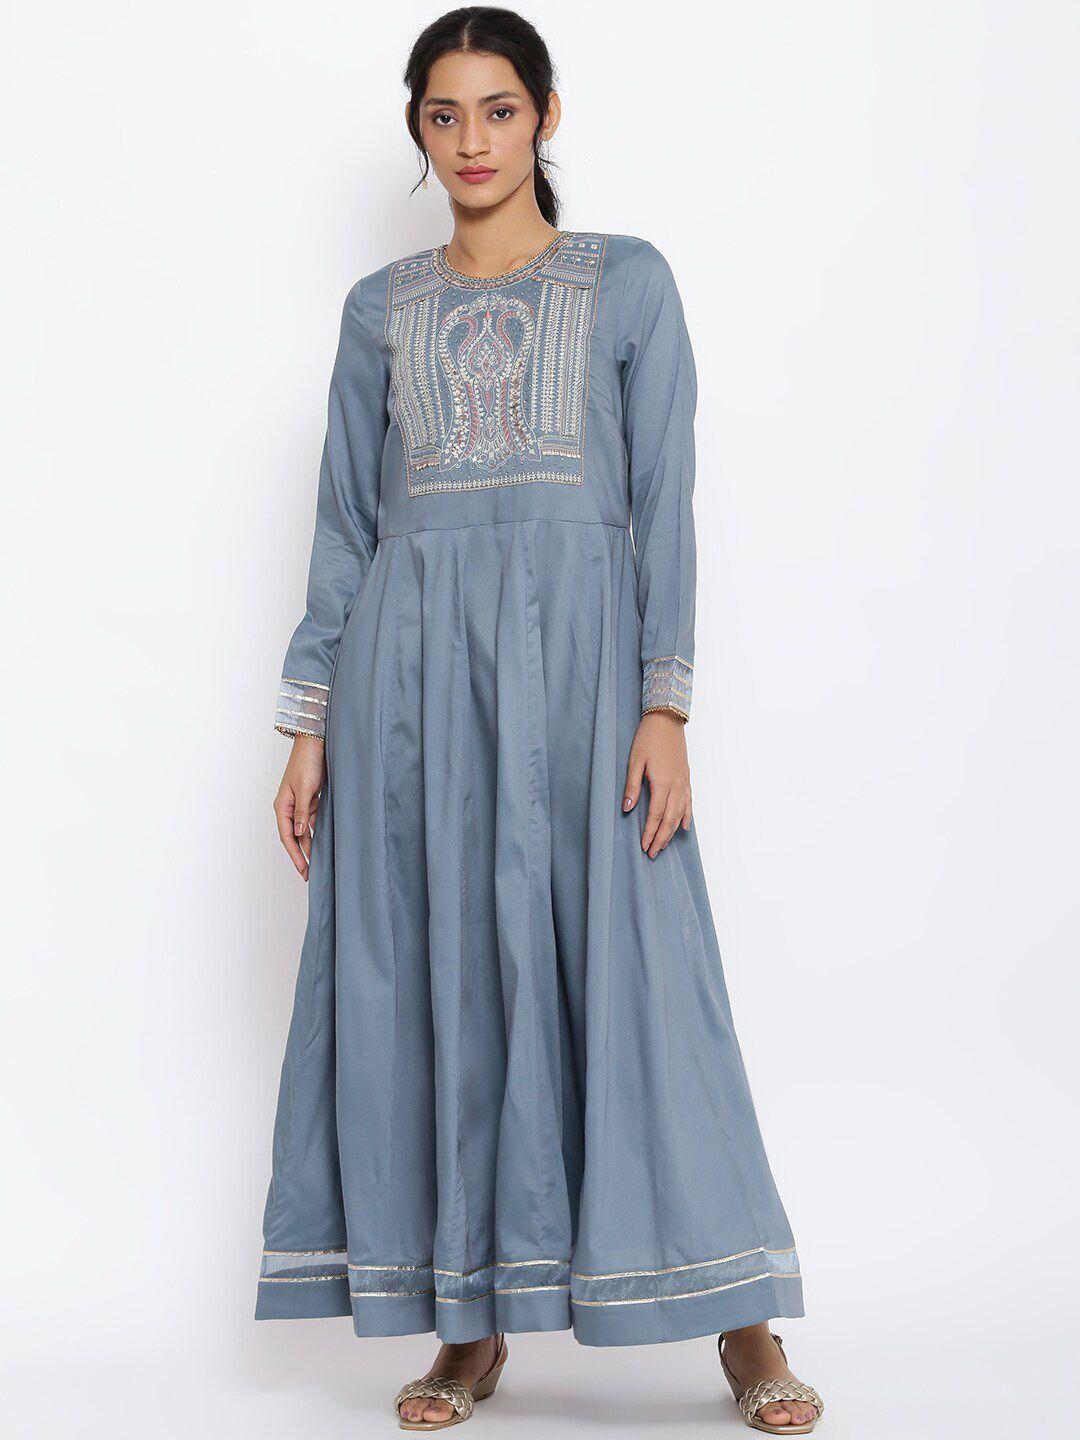 wishful-women-blue-ethnic-motifs-embroidered-ethnic-maxi-dress